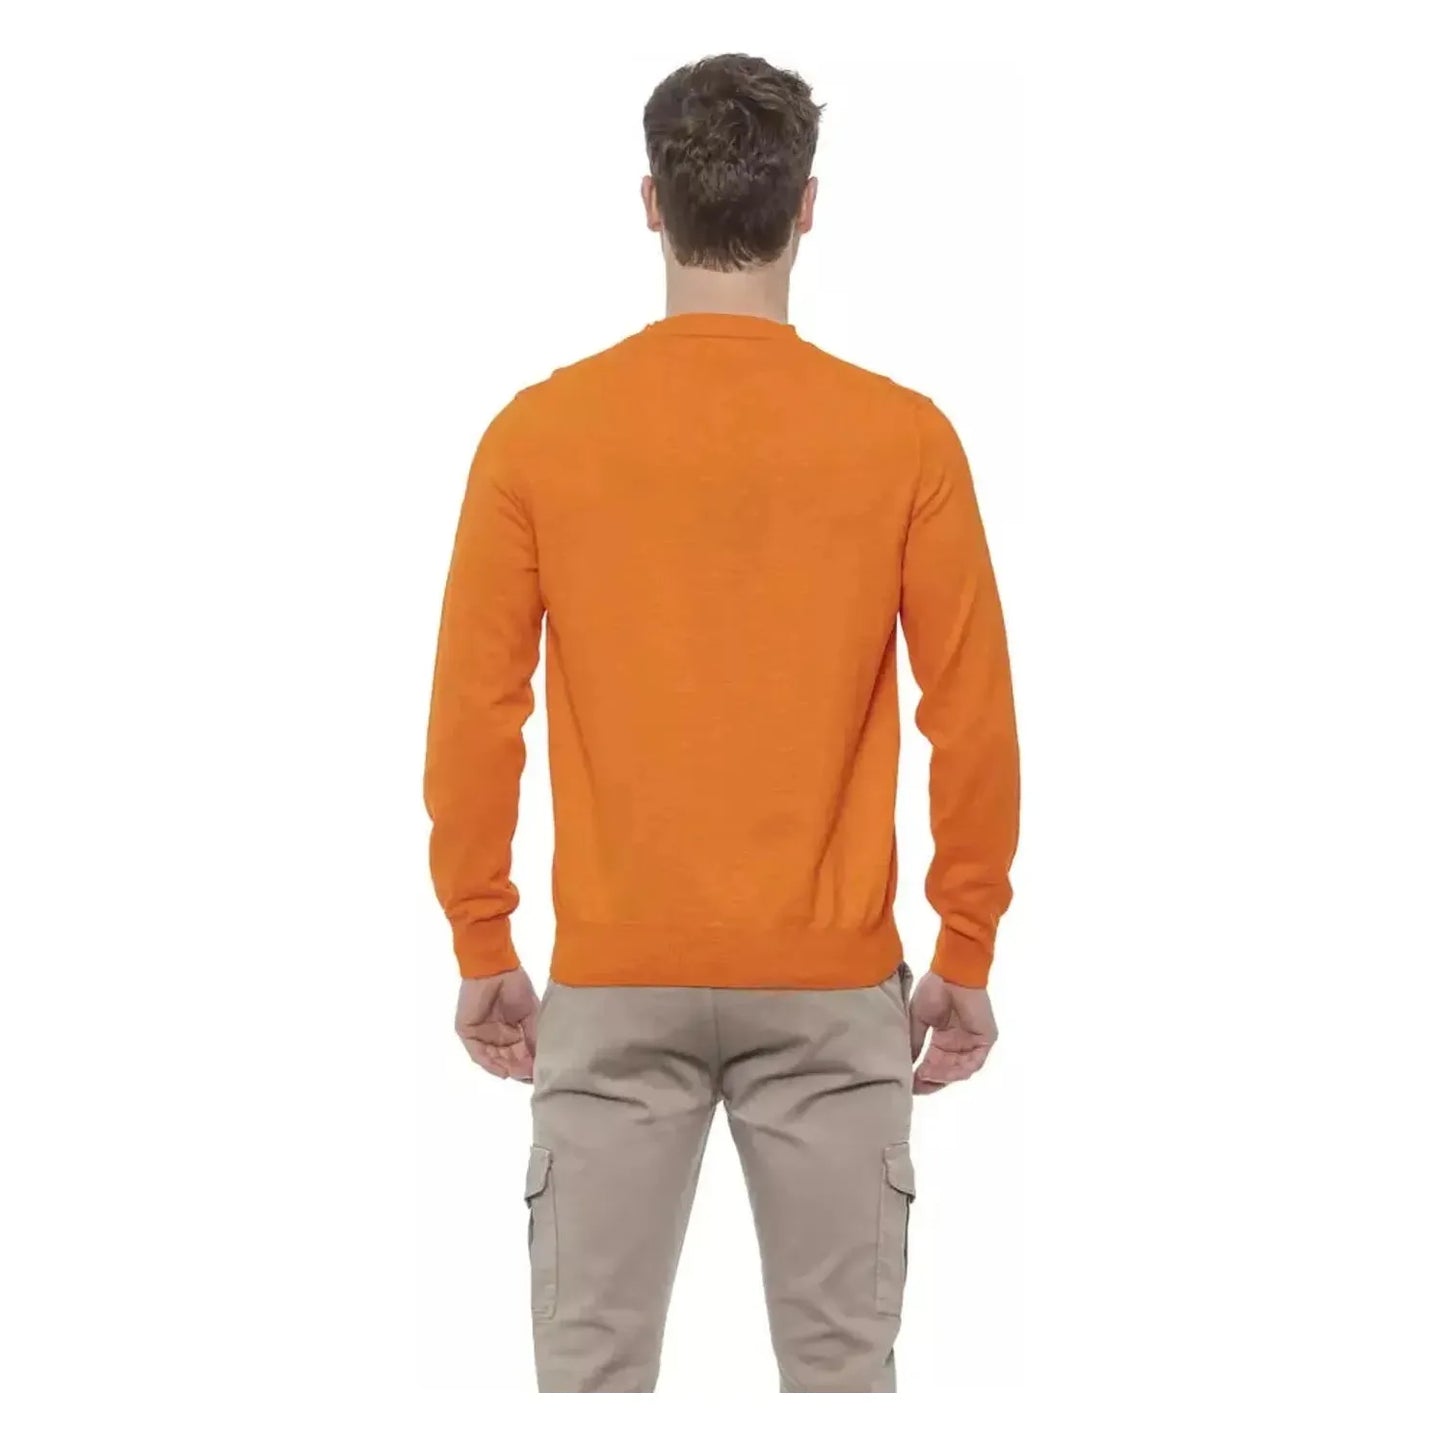 Conte of Florence Elegant Crewneck Cotton Sweater in Orange orange-sweater stock_product_image_20329_788115966-17-bf205c63-2b8.webp